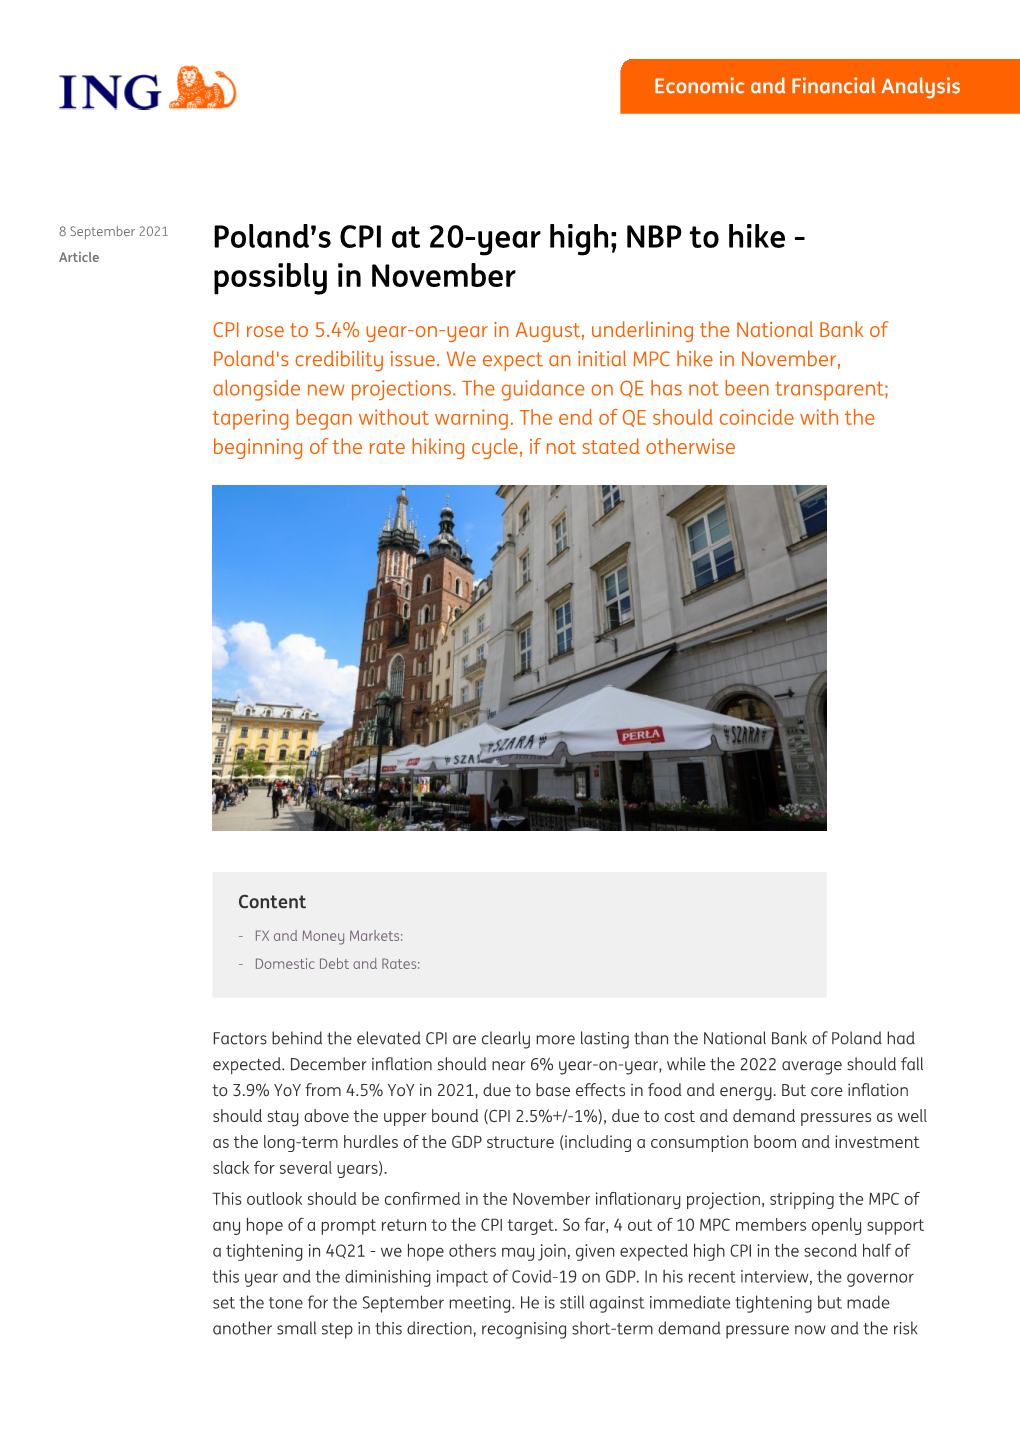 Poland's CPI at 20-Year High; NPB to Hike